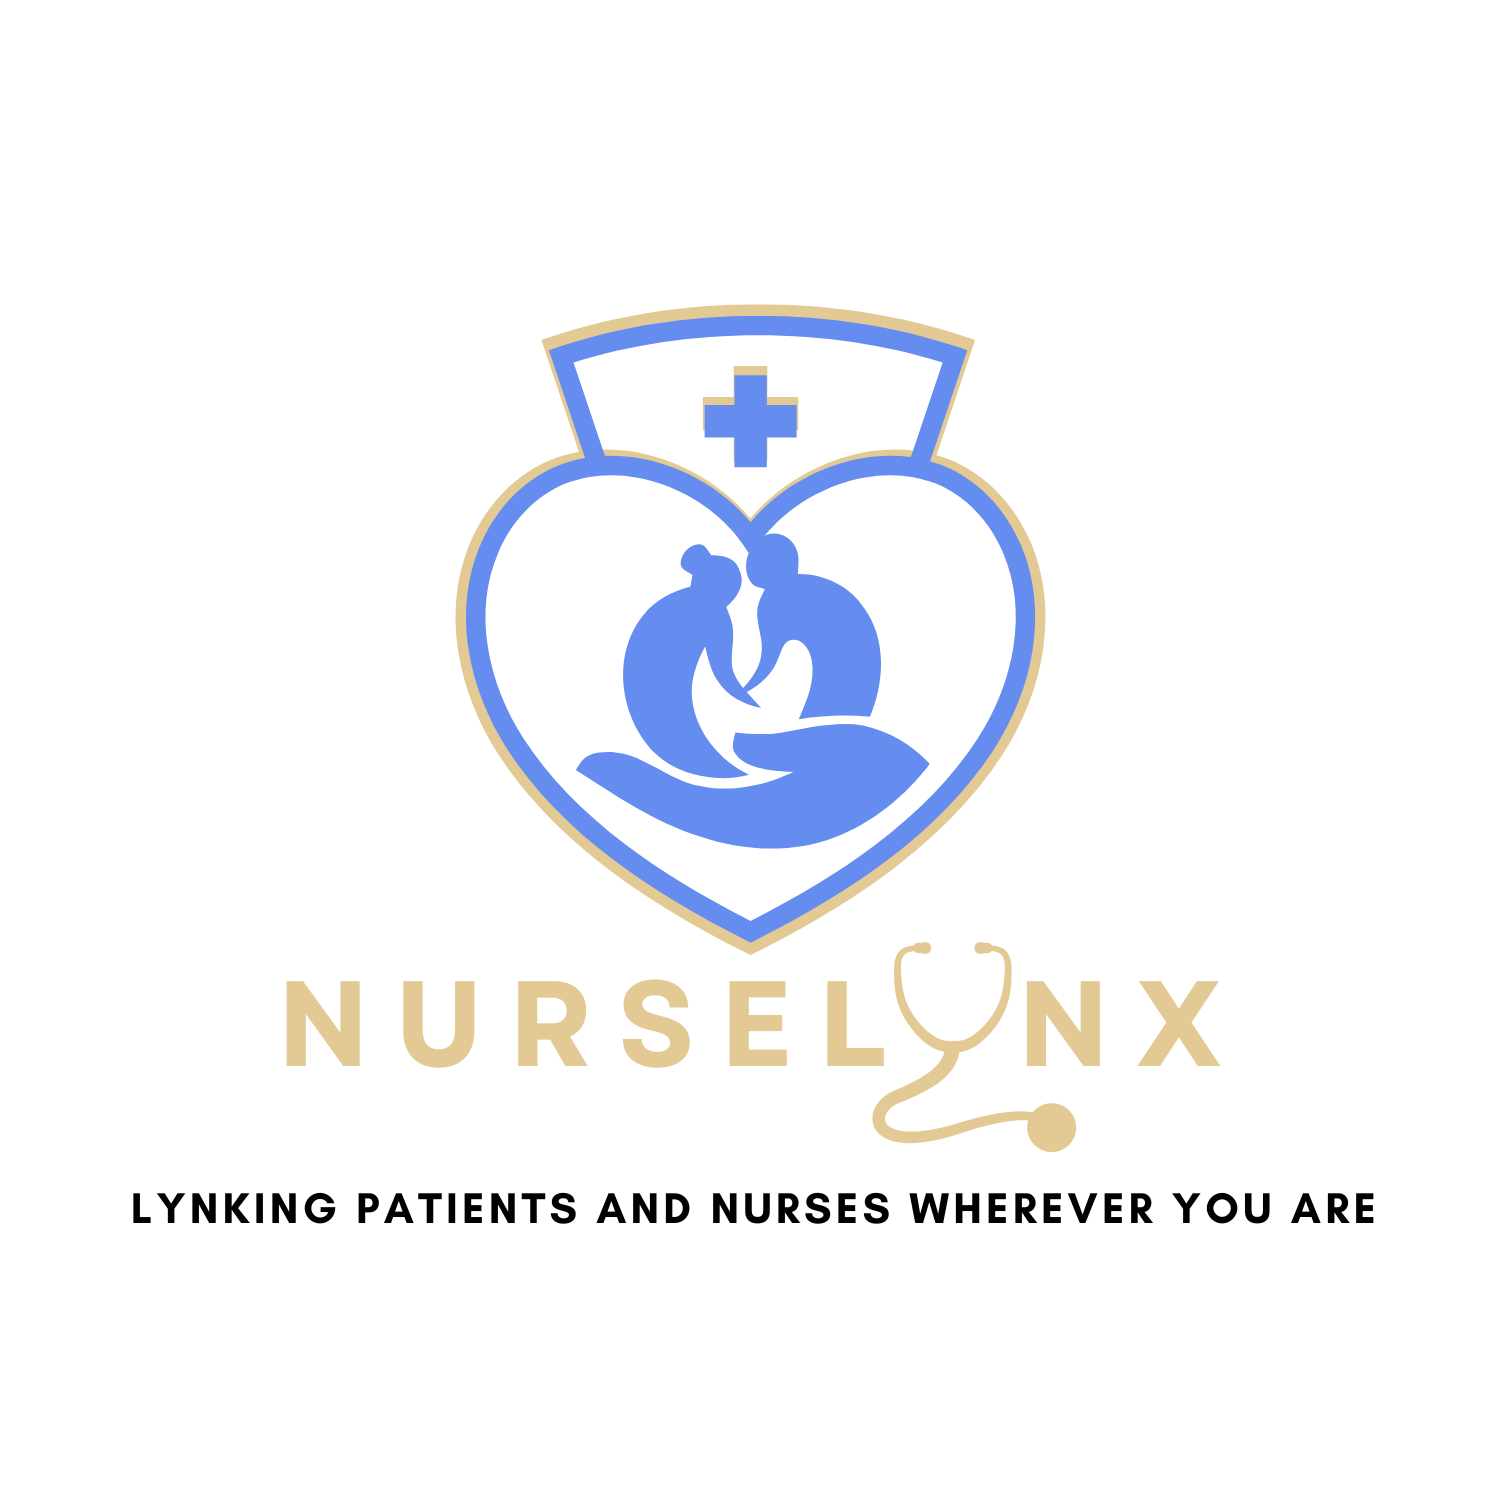 Nurselynx logo